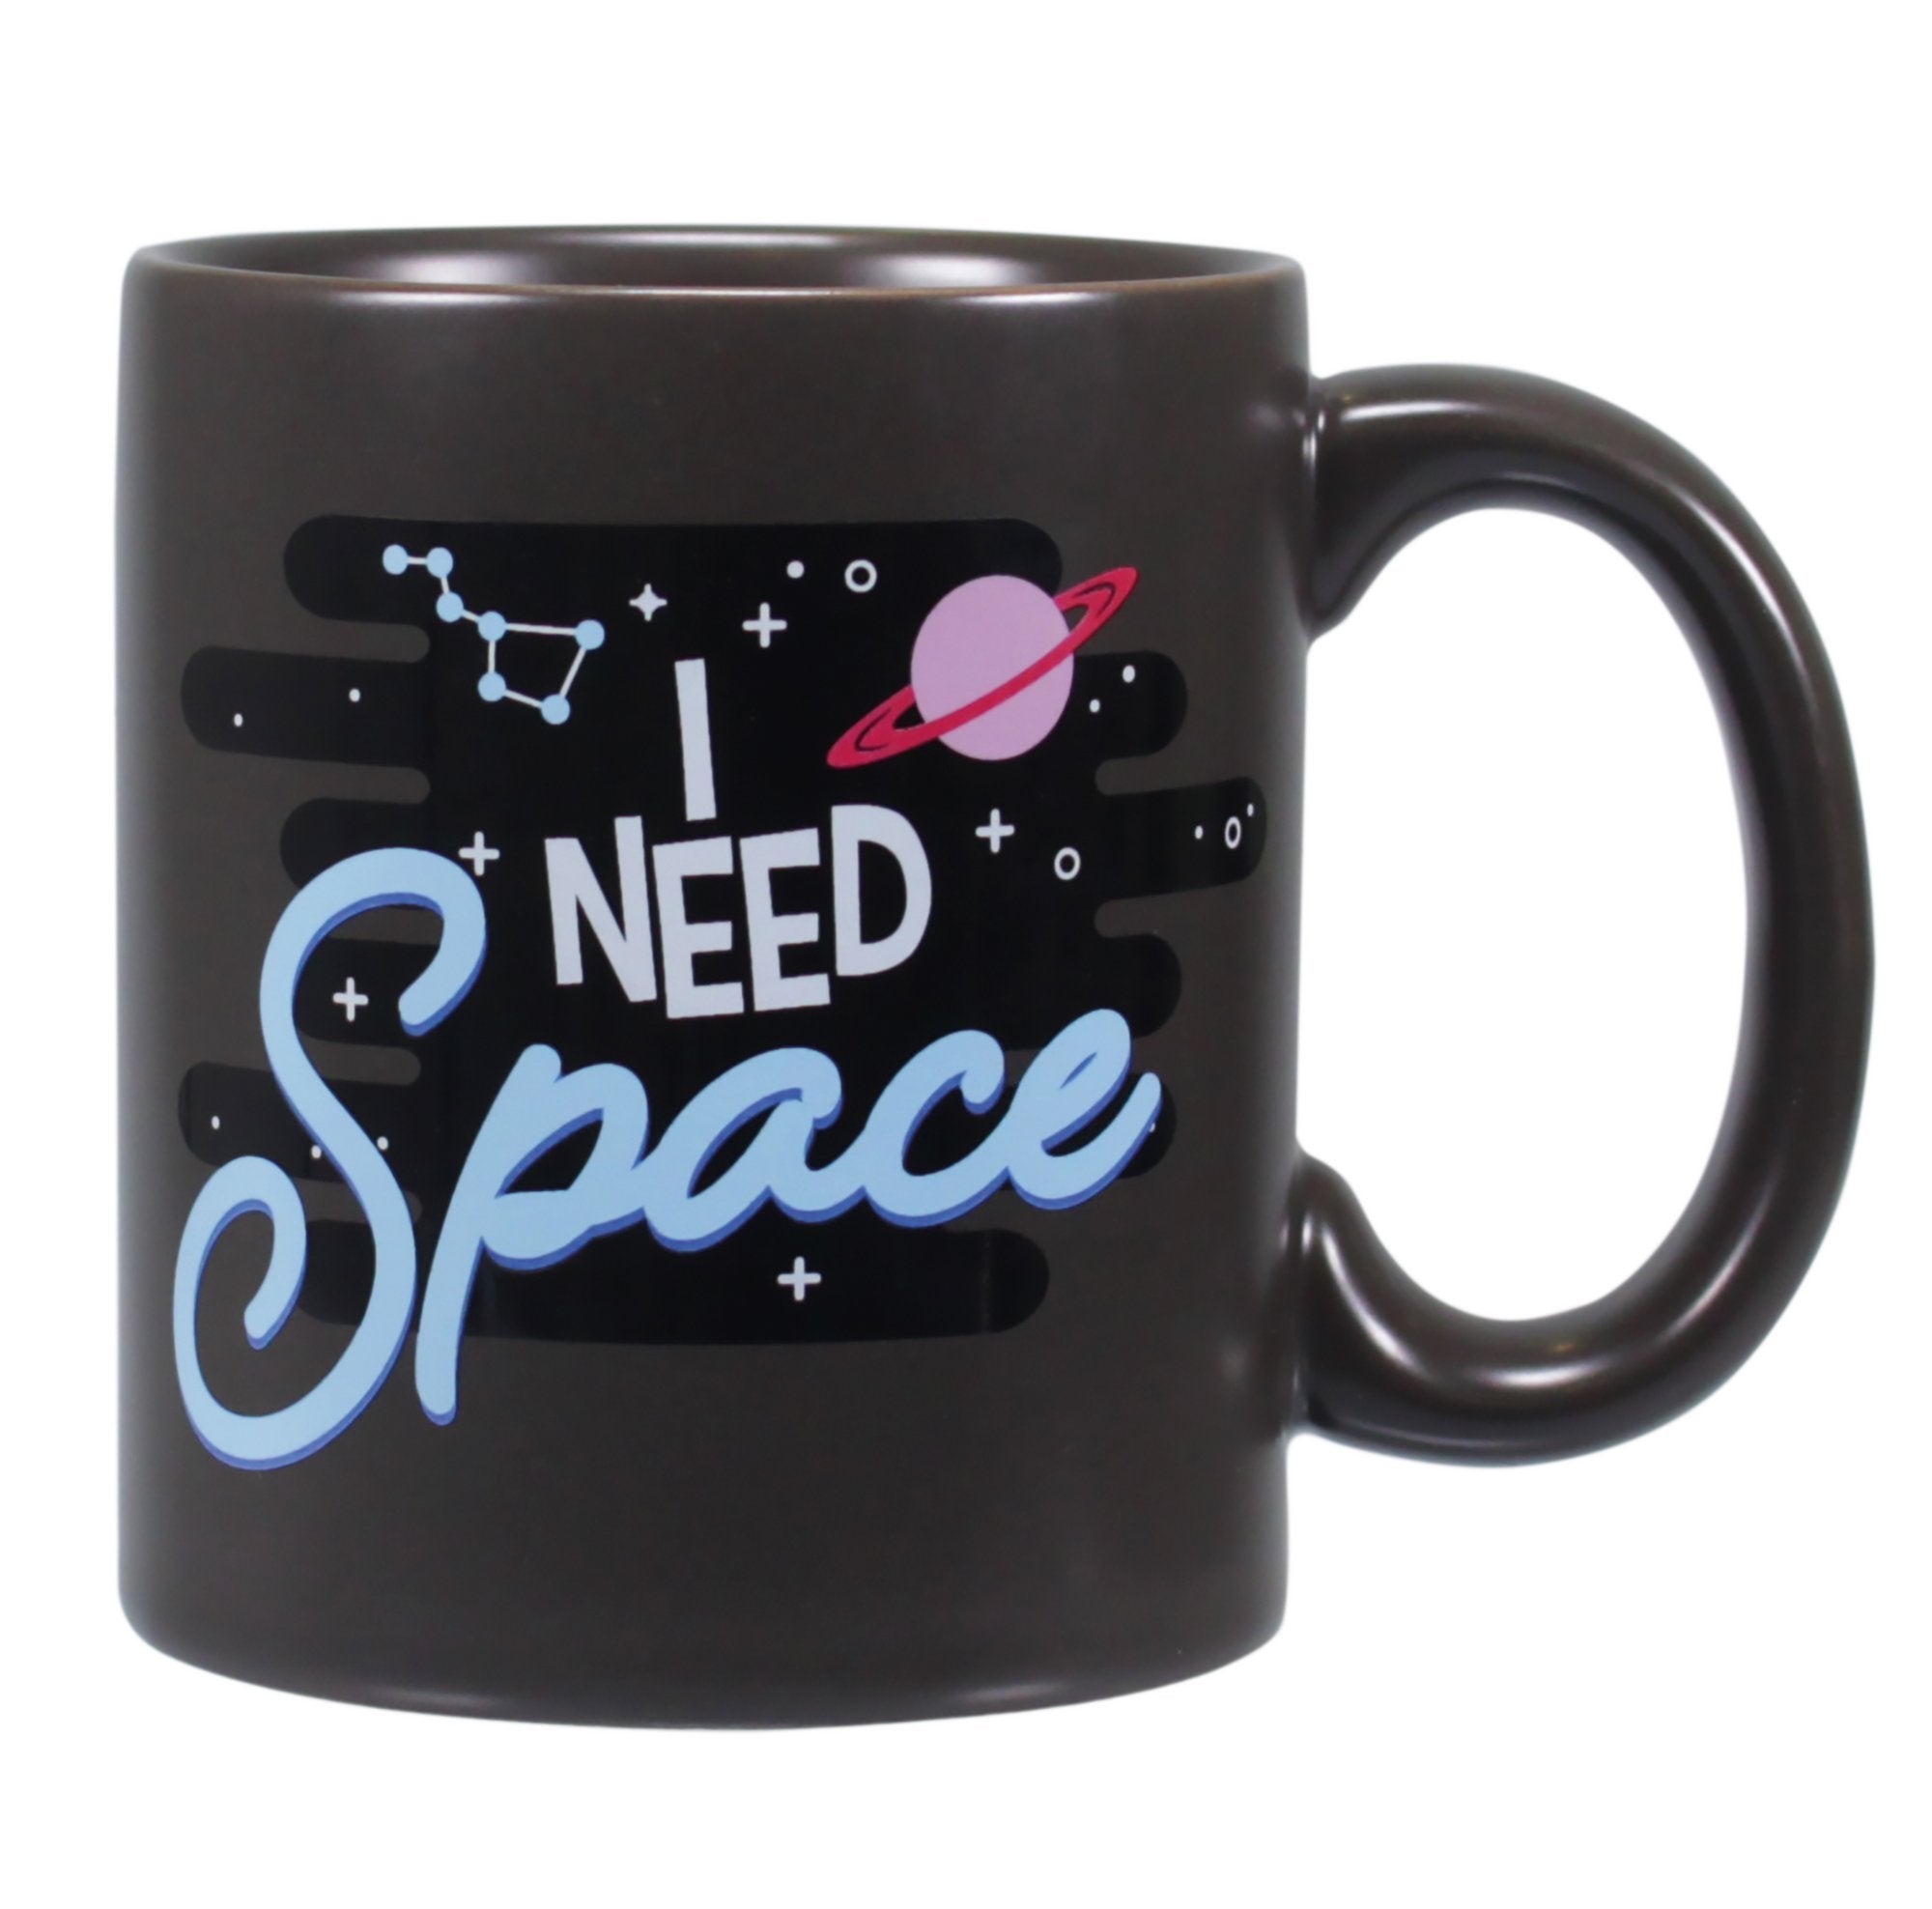 IFLScience! Mug - I Need Space